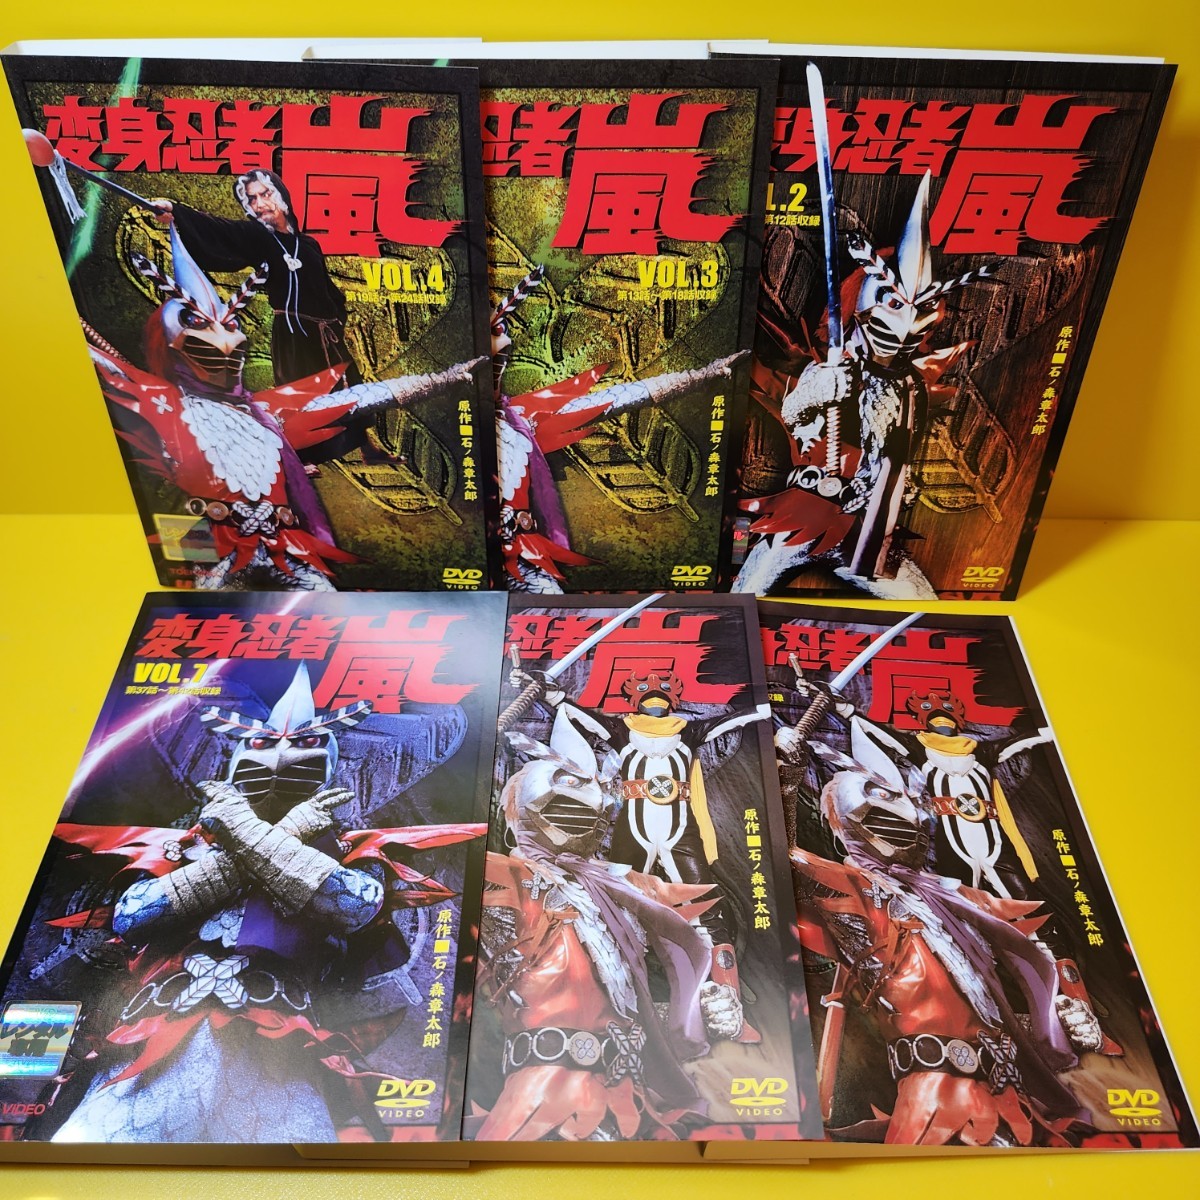  new goods case replaced metamorphosis ninja storm DVD 8 volume set 